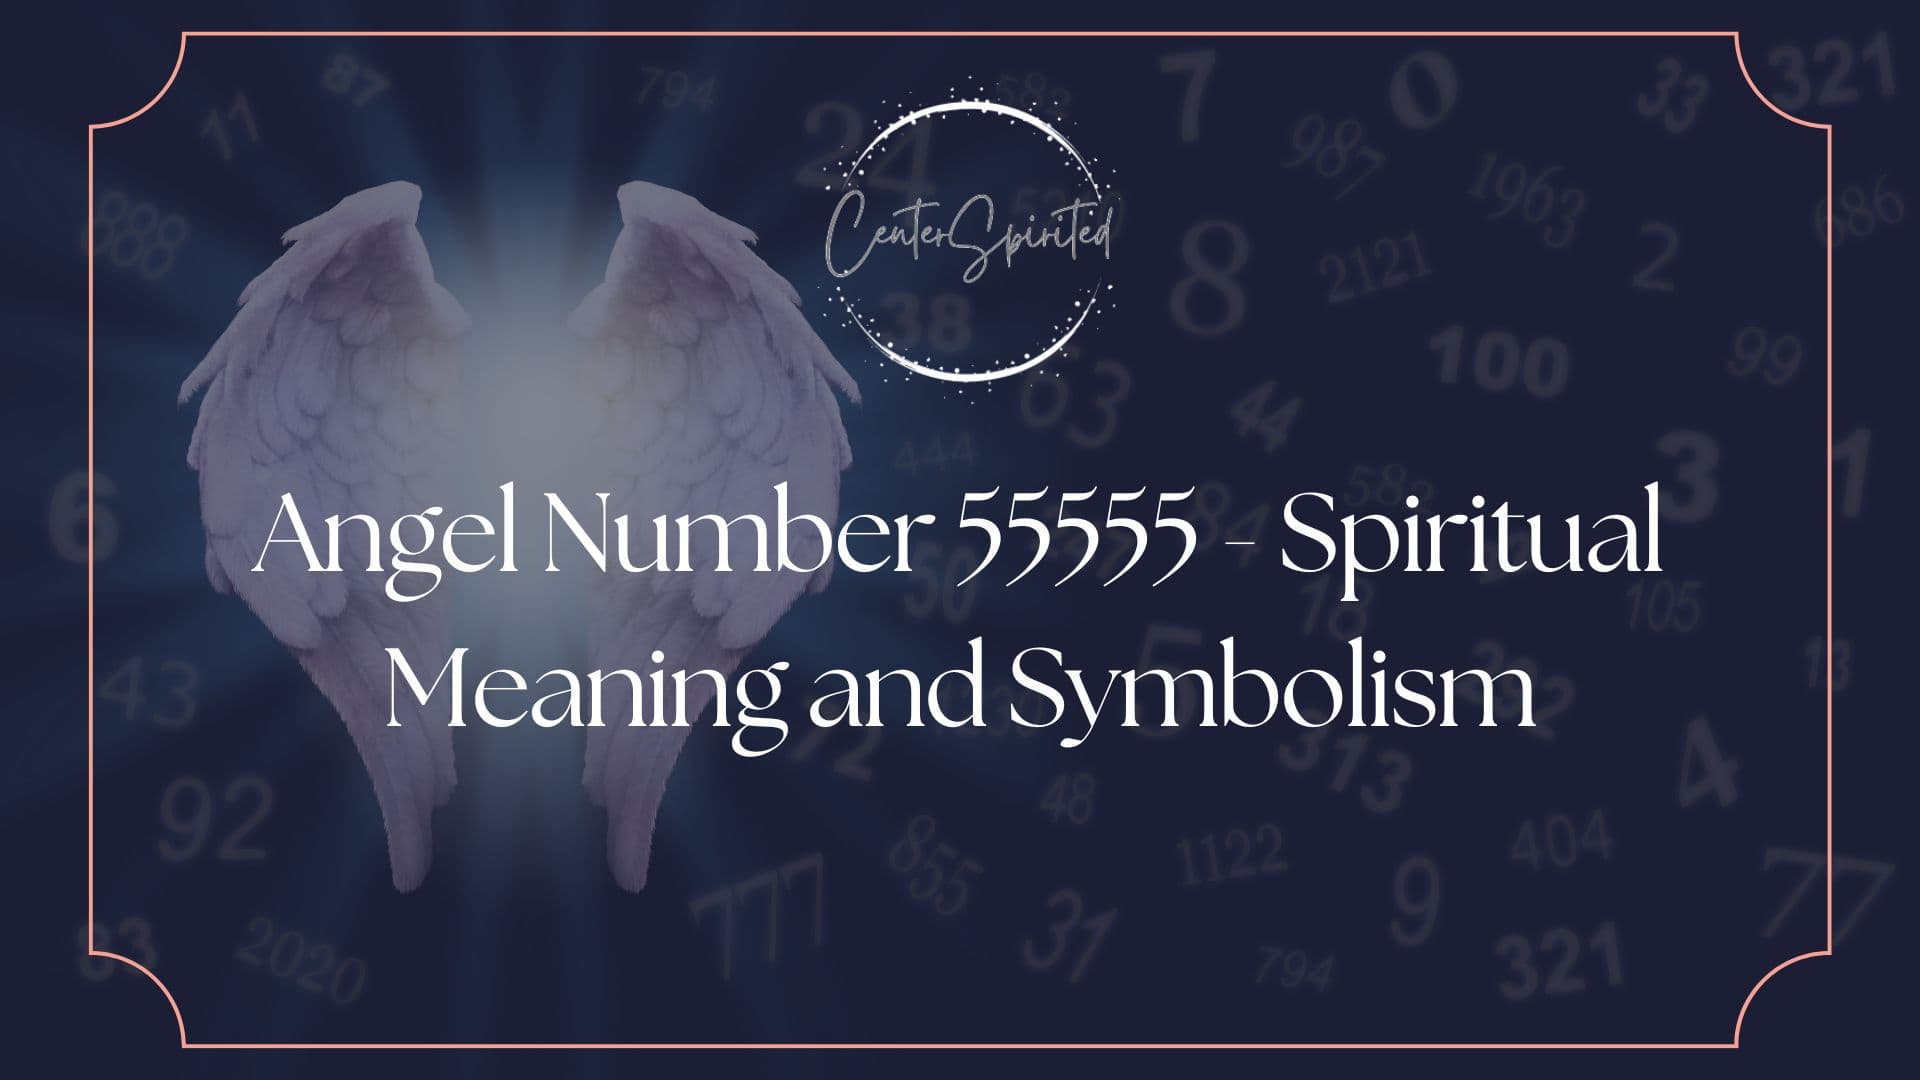 55555 angel